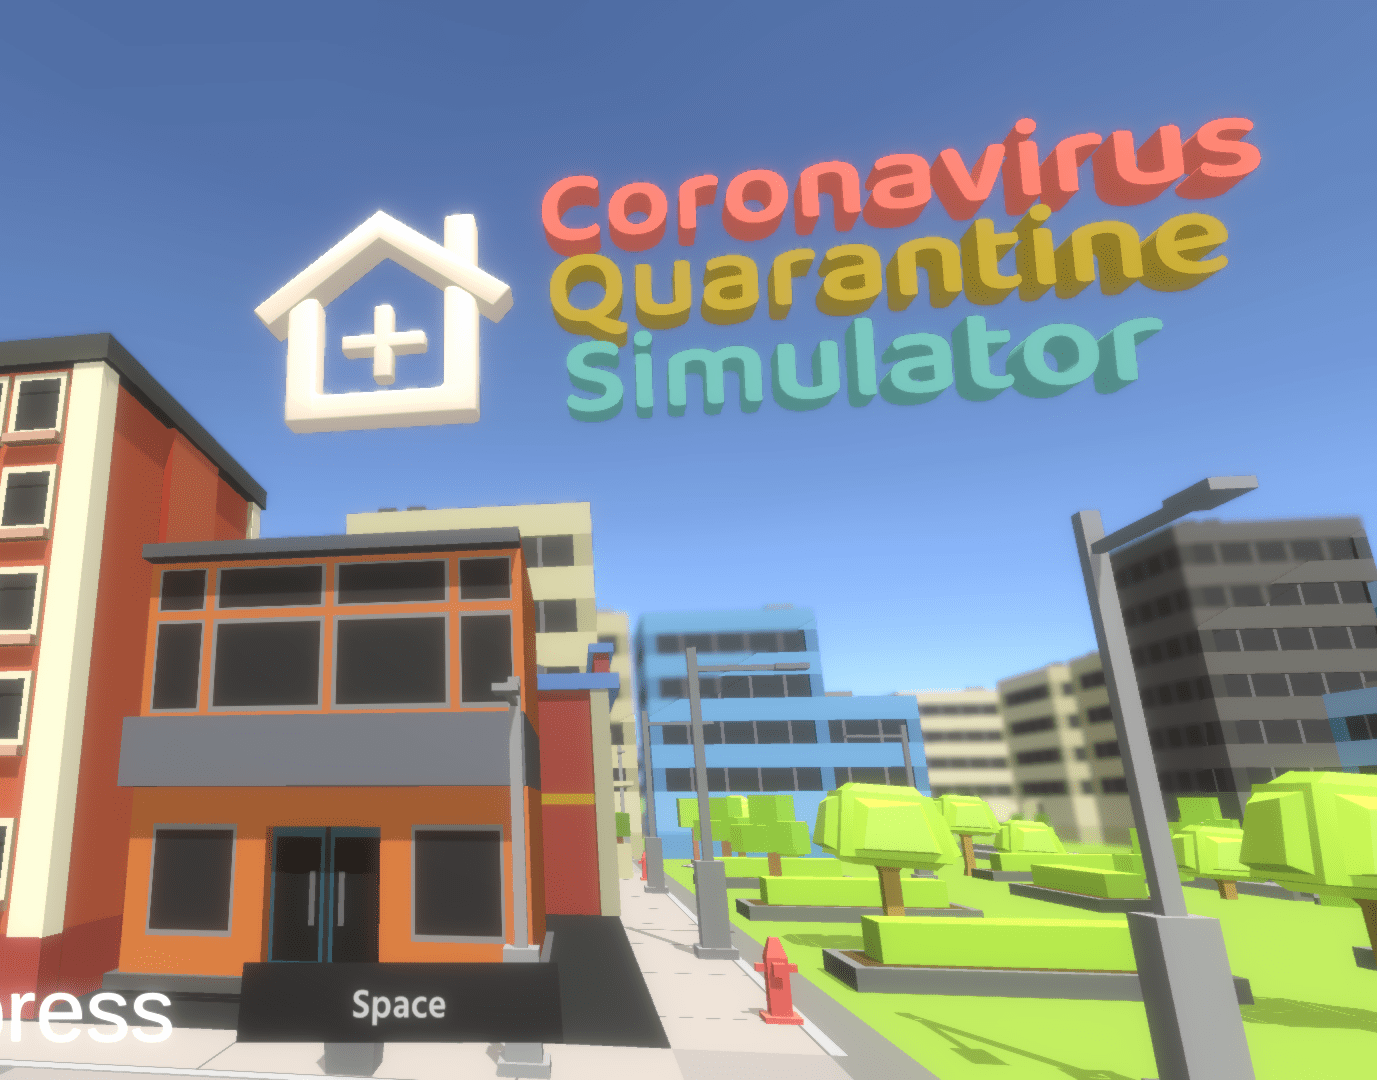 2020 06 18 e1592511173753 - Coronavirus Quarantine Simulator Review - Indie Game